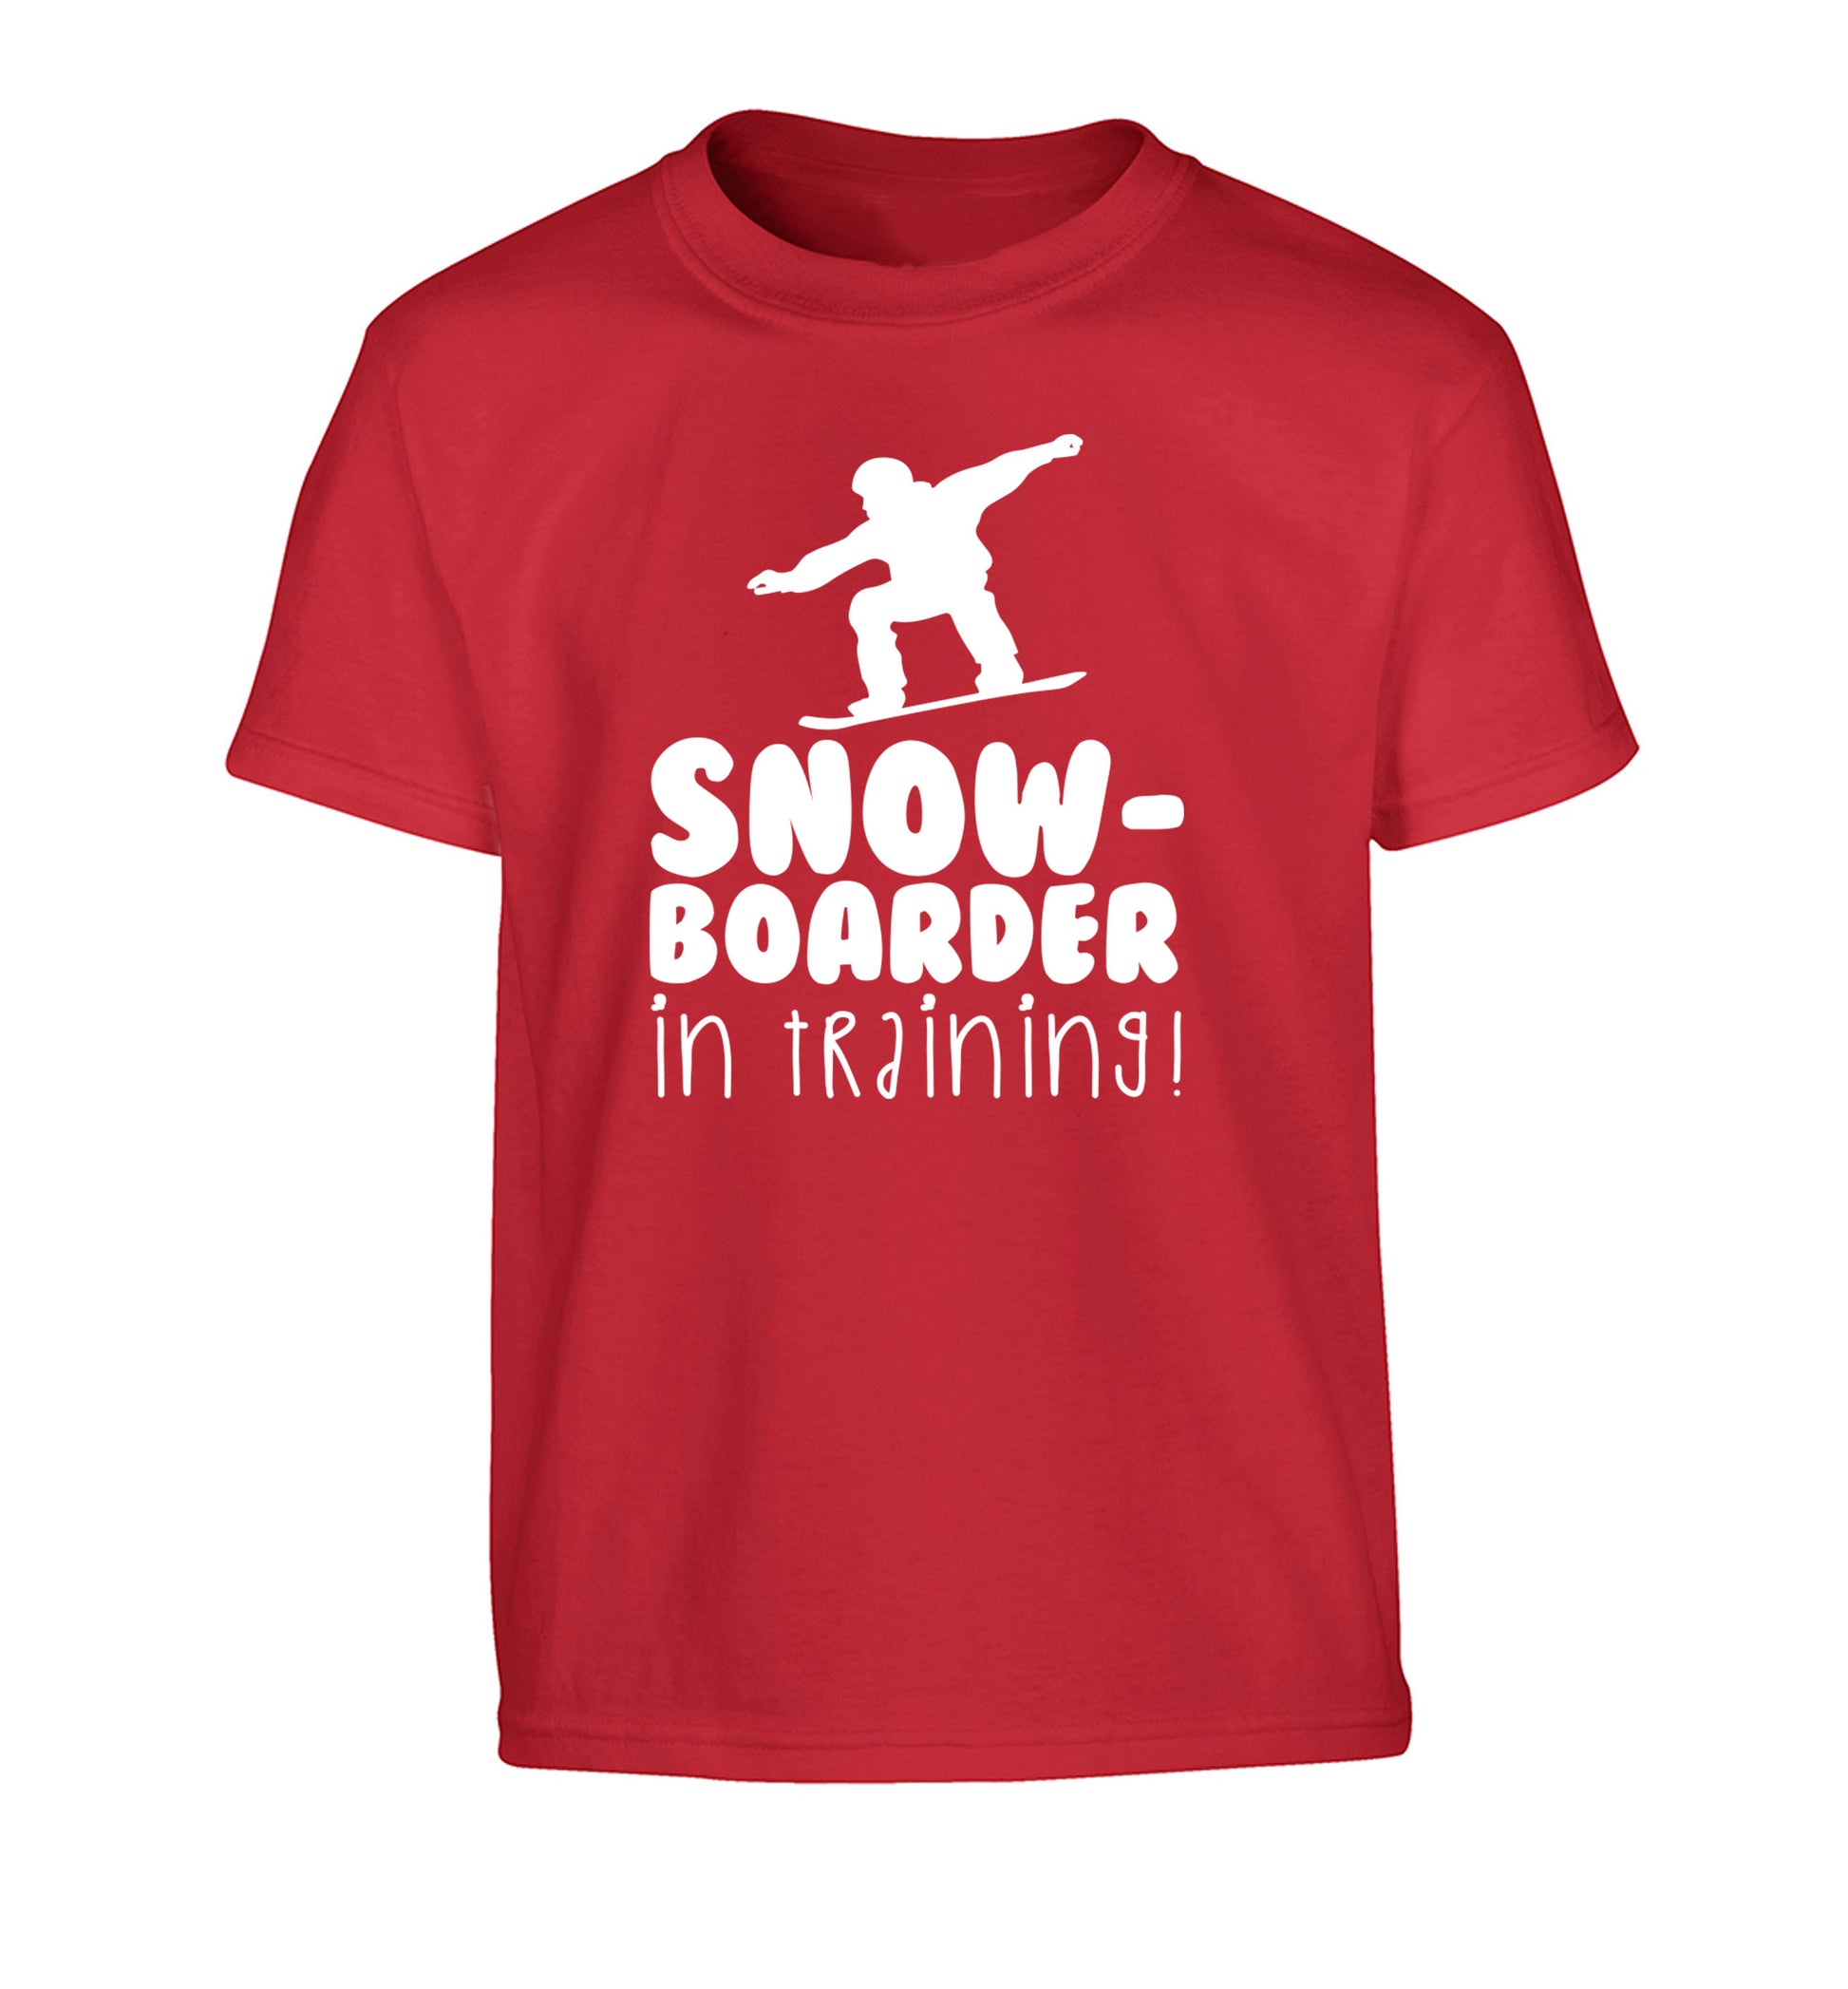 Snowboarder in training Children's red Tshirt 12-14 Years